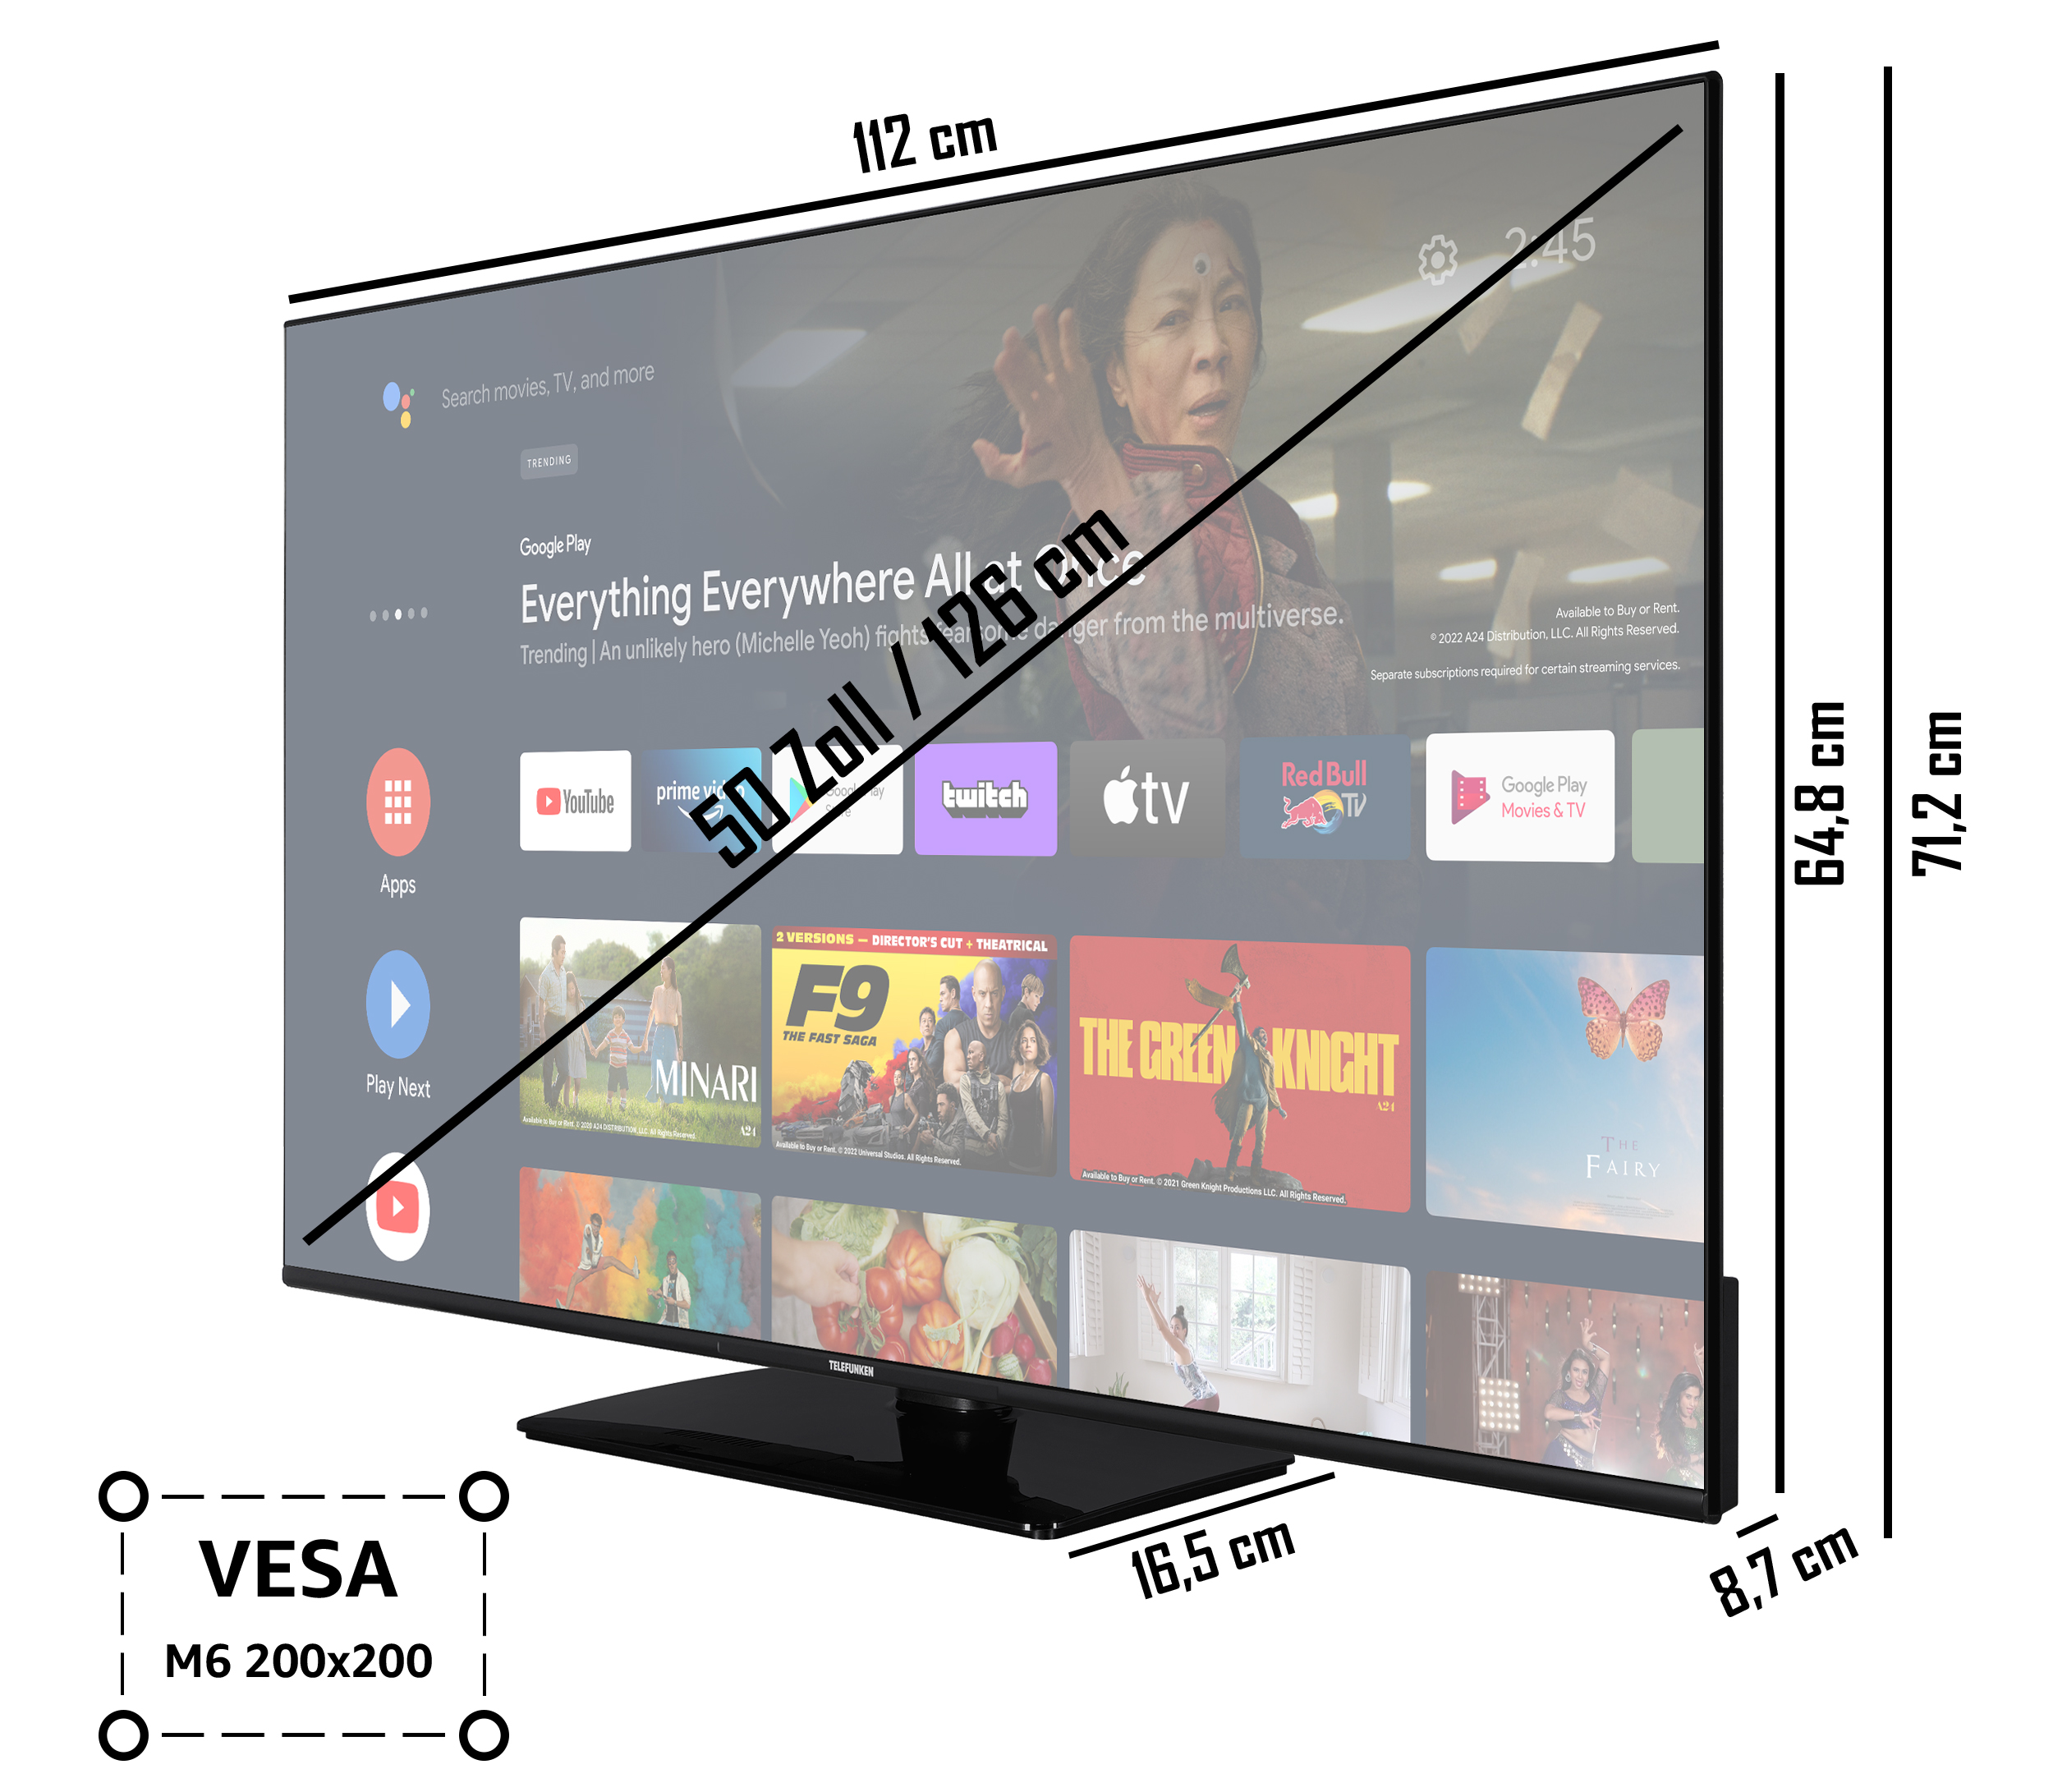 (Flat, cm, Zoll 126 4K, XU50AN754M TV) TELEFUNKEN 50 UHD SMART LED / TV